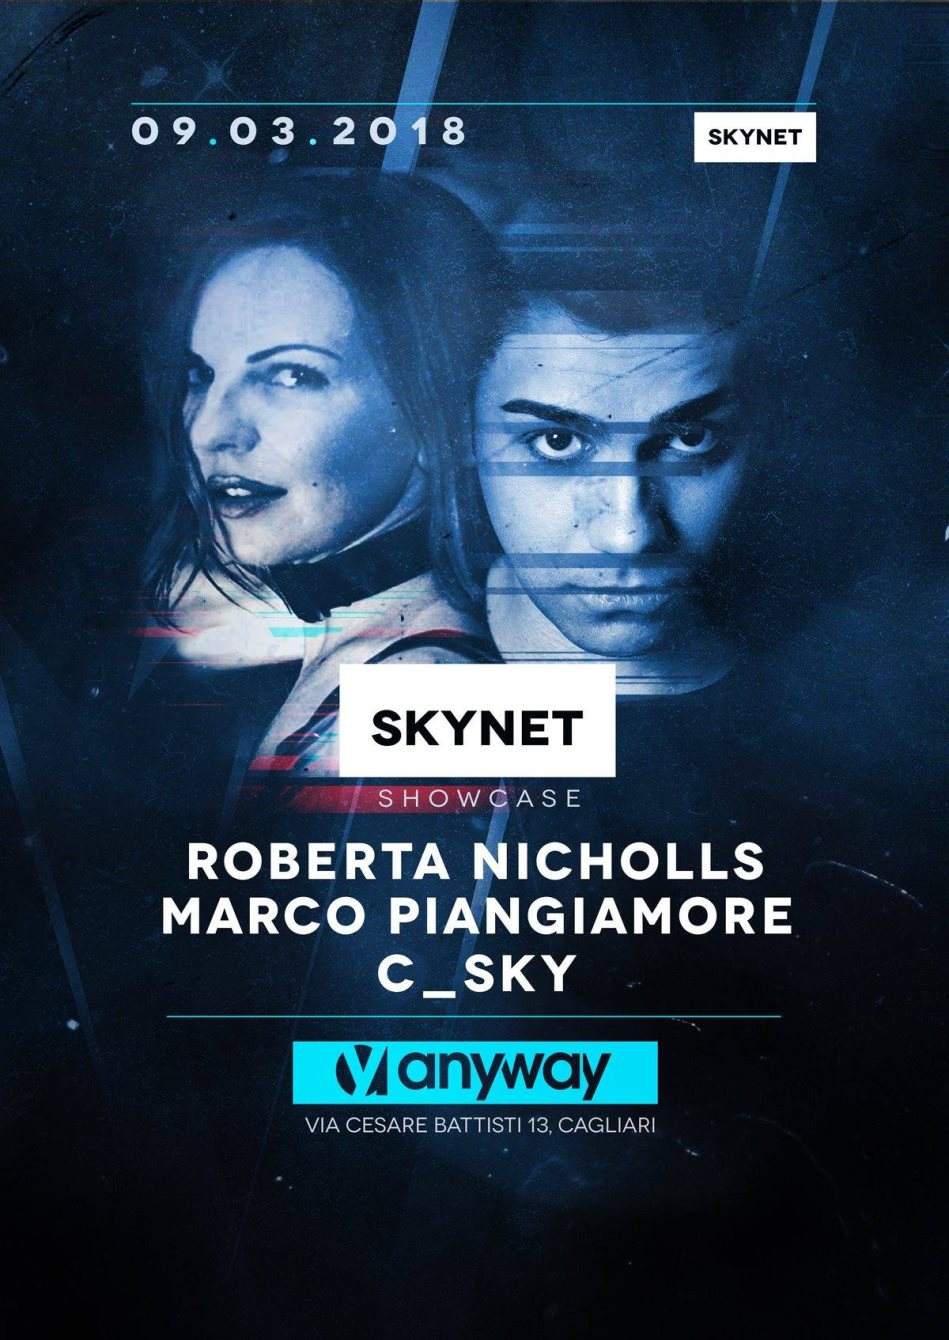 Skynet Showcase feat. Roberta Nicholls, Marco Piangiamore - フライヤー表